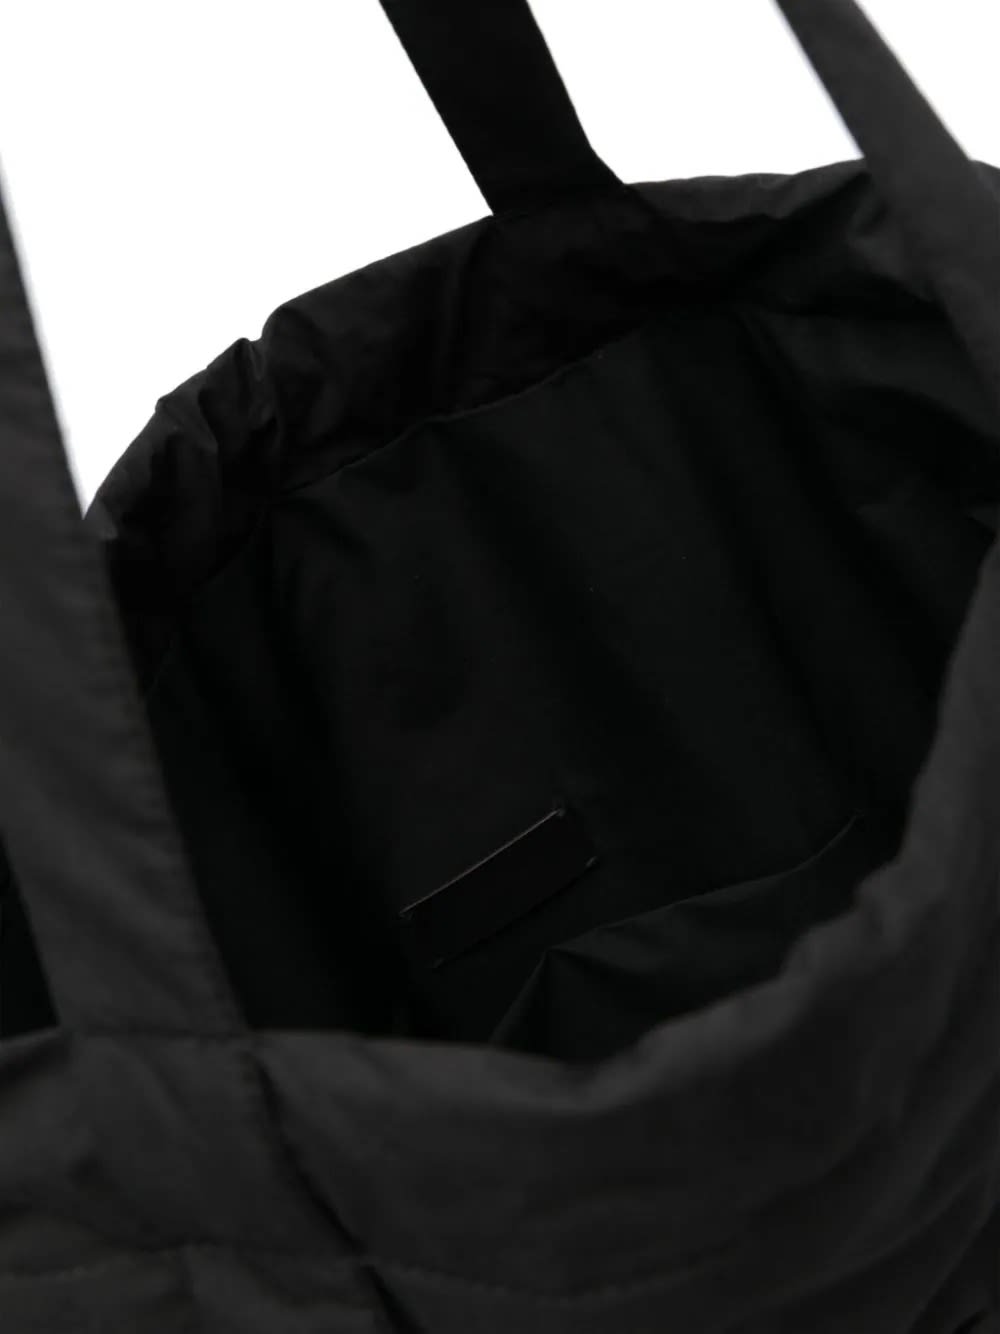 Shop Moncler Black Tote Bag With Aq Drawstring